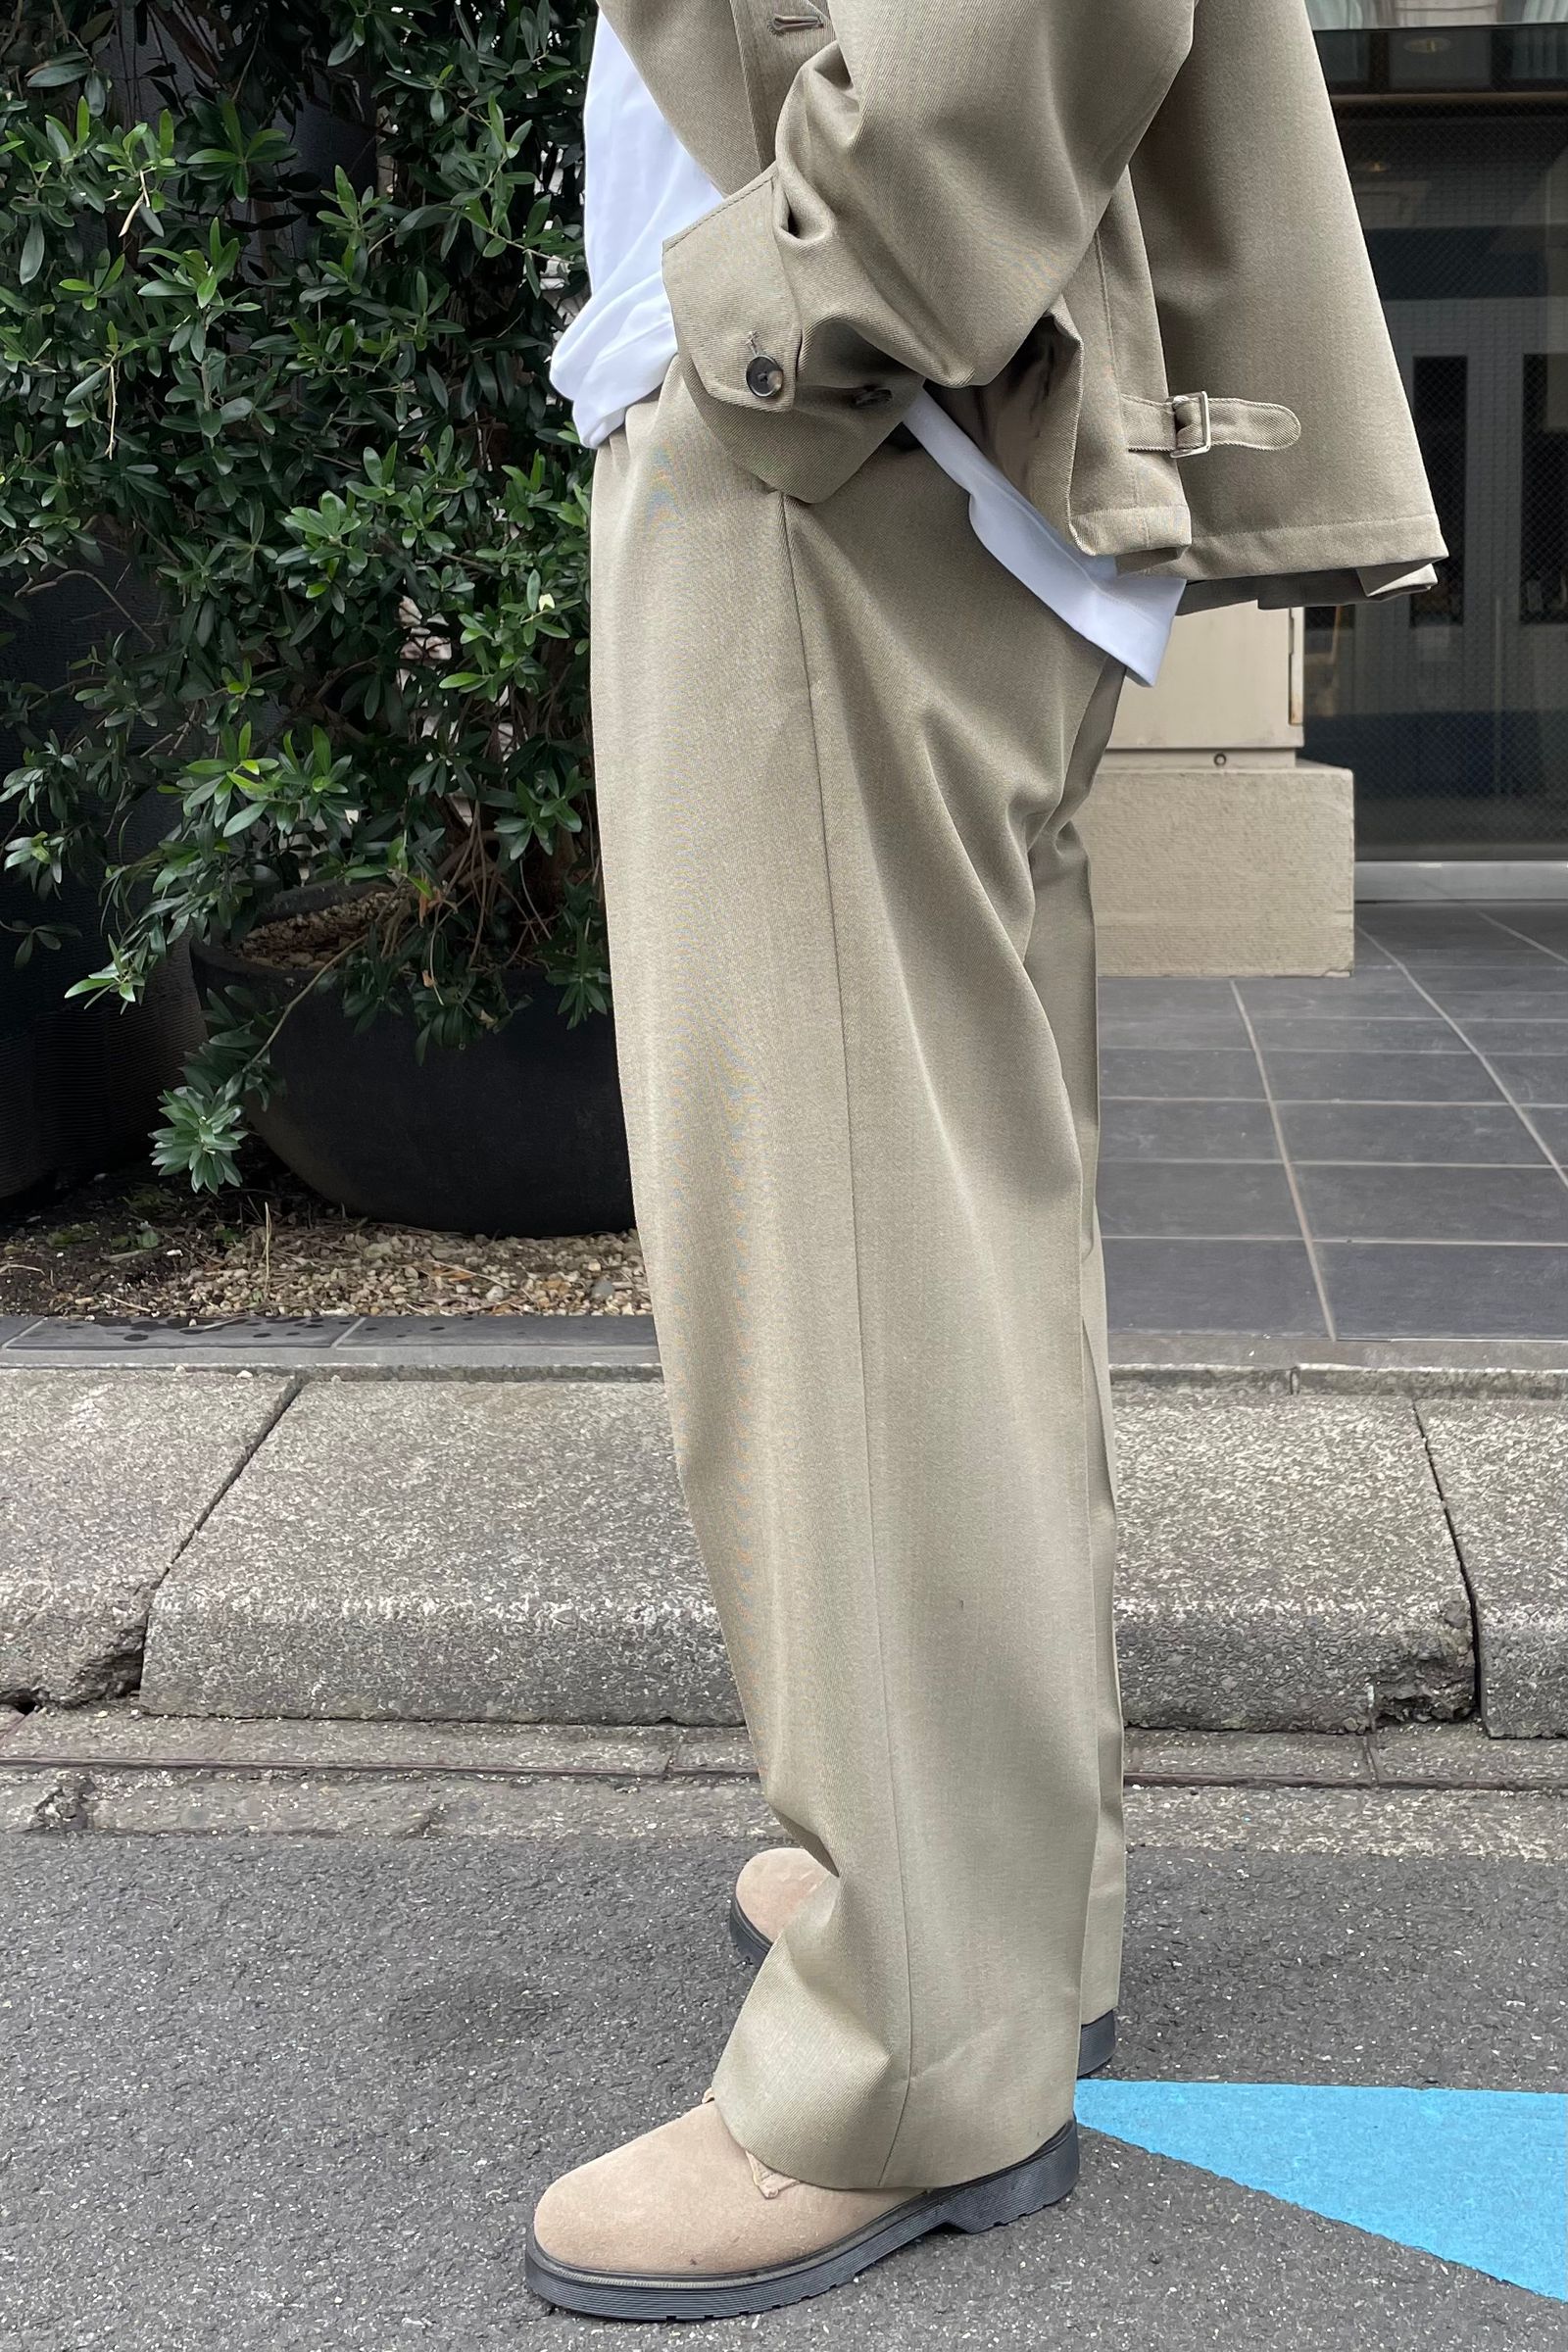 A.PRESSE - covert cloth trousers -khaki- 23ss | asterisk